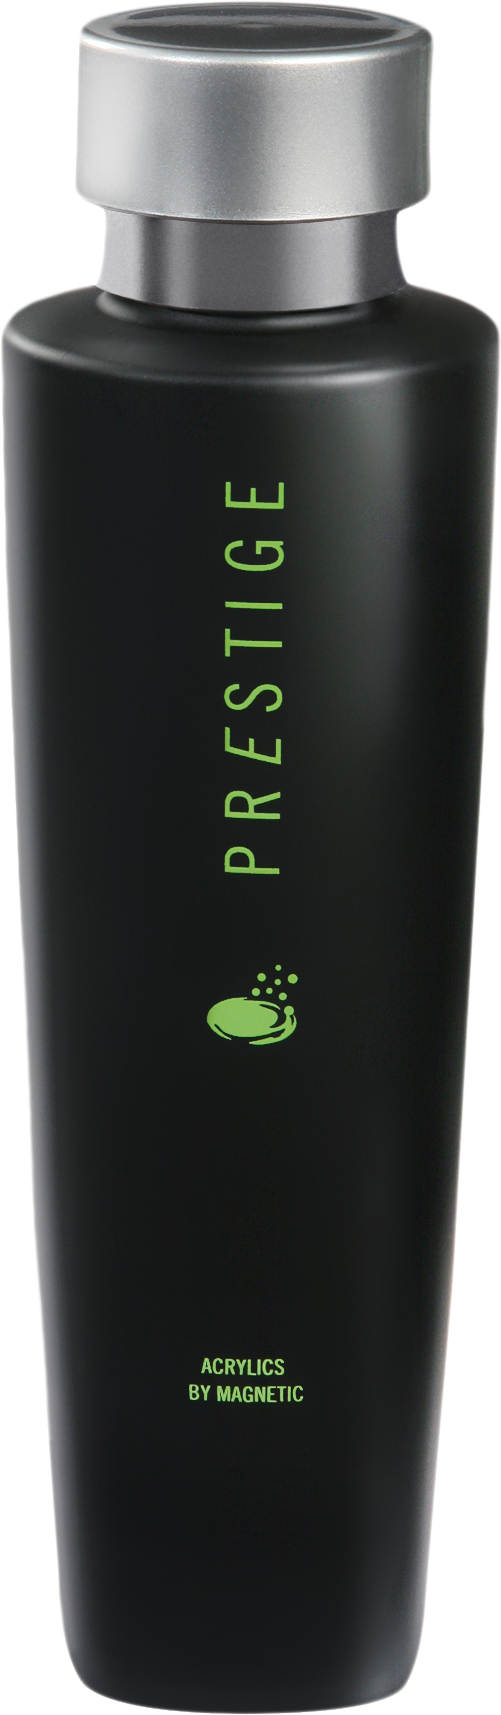 Prestige Acrylic Liquid 200 ml